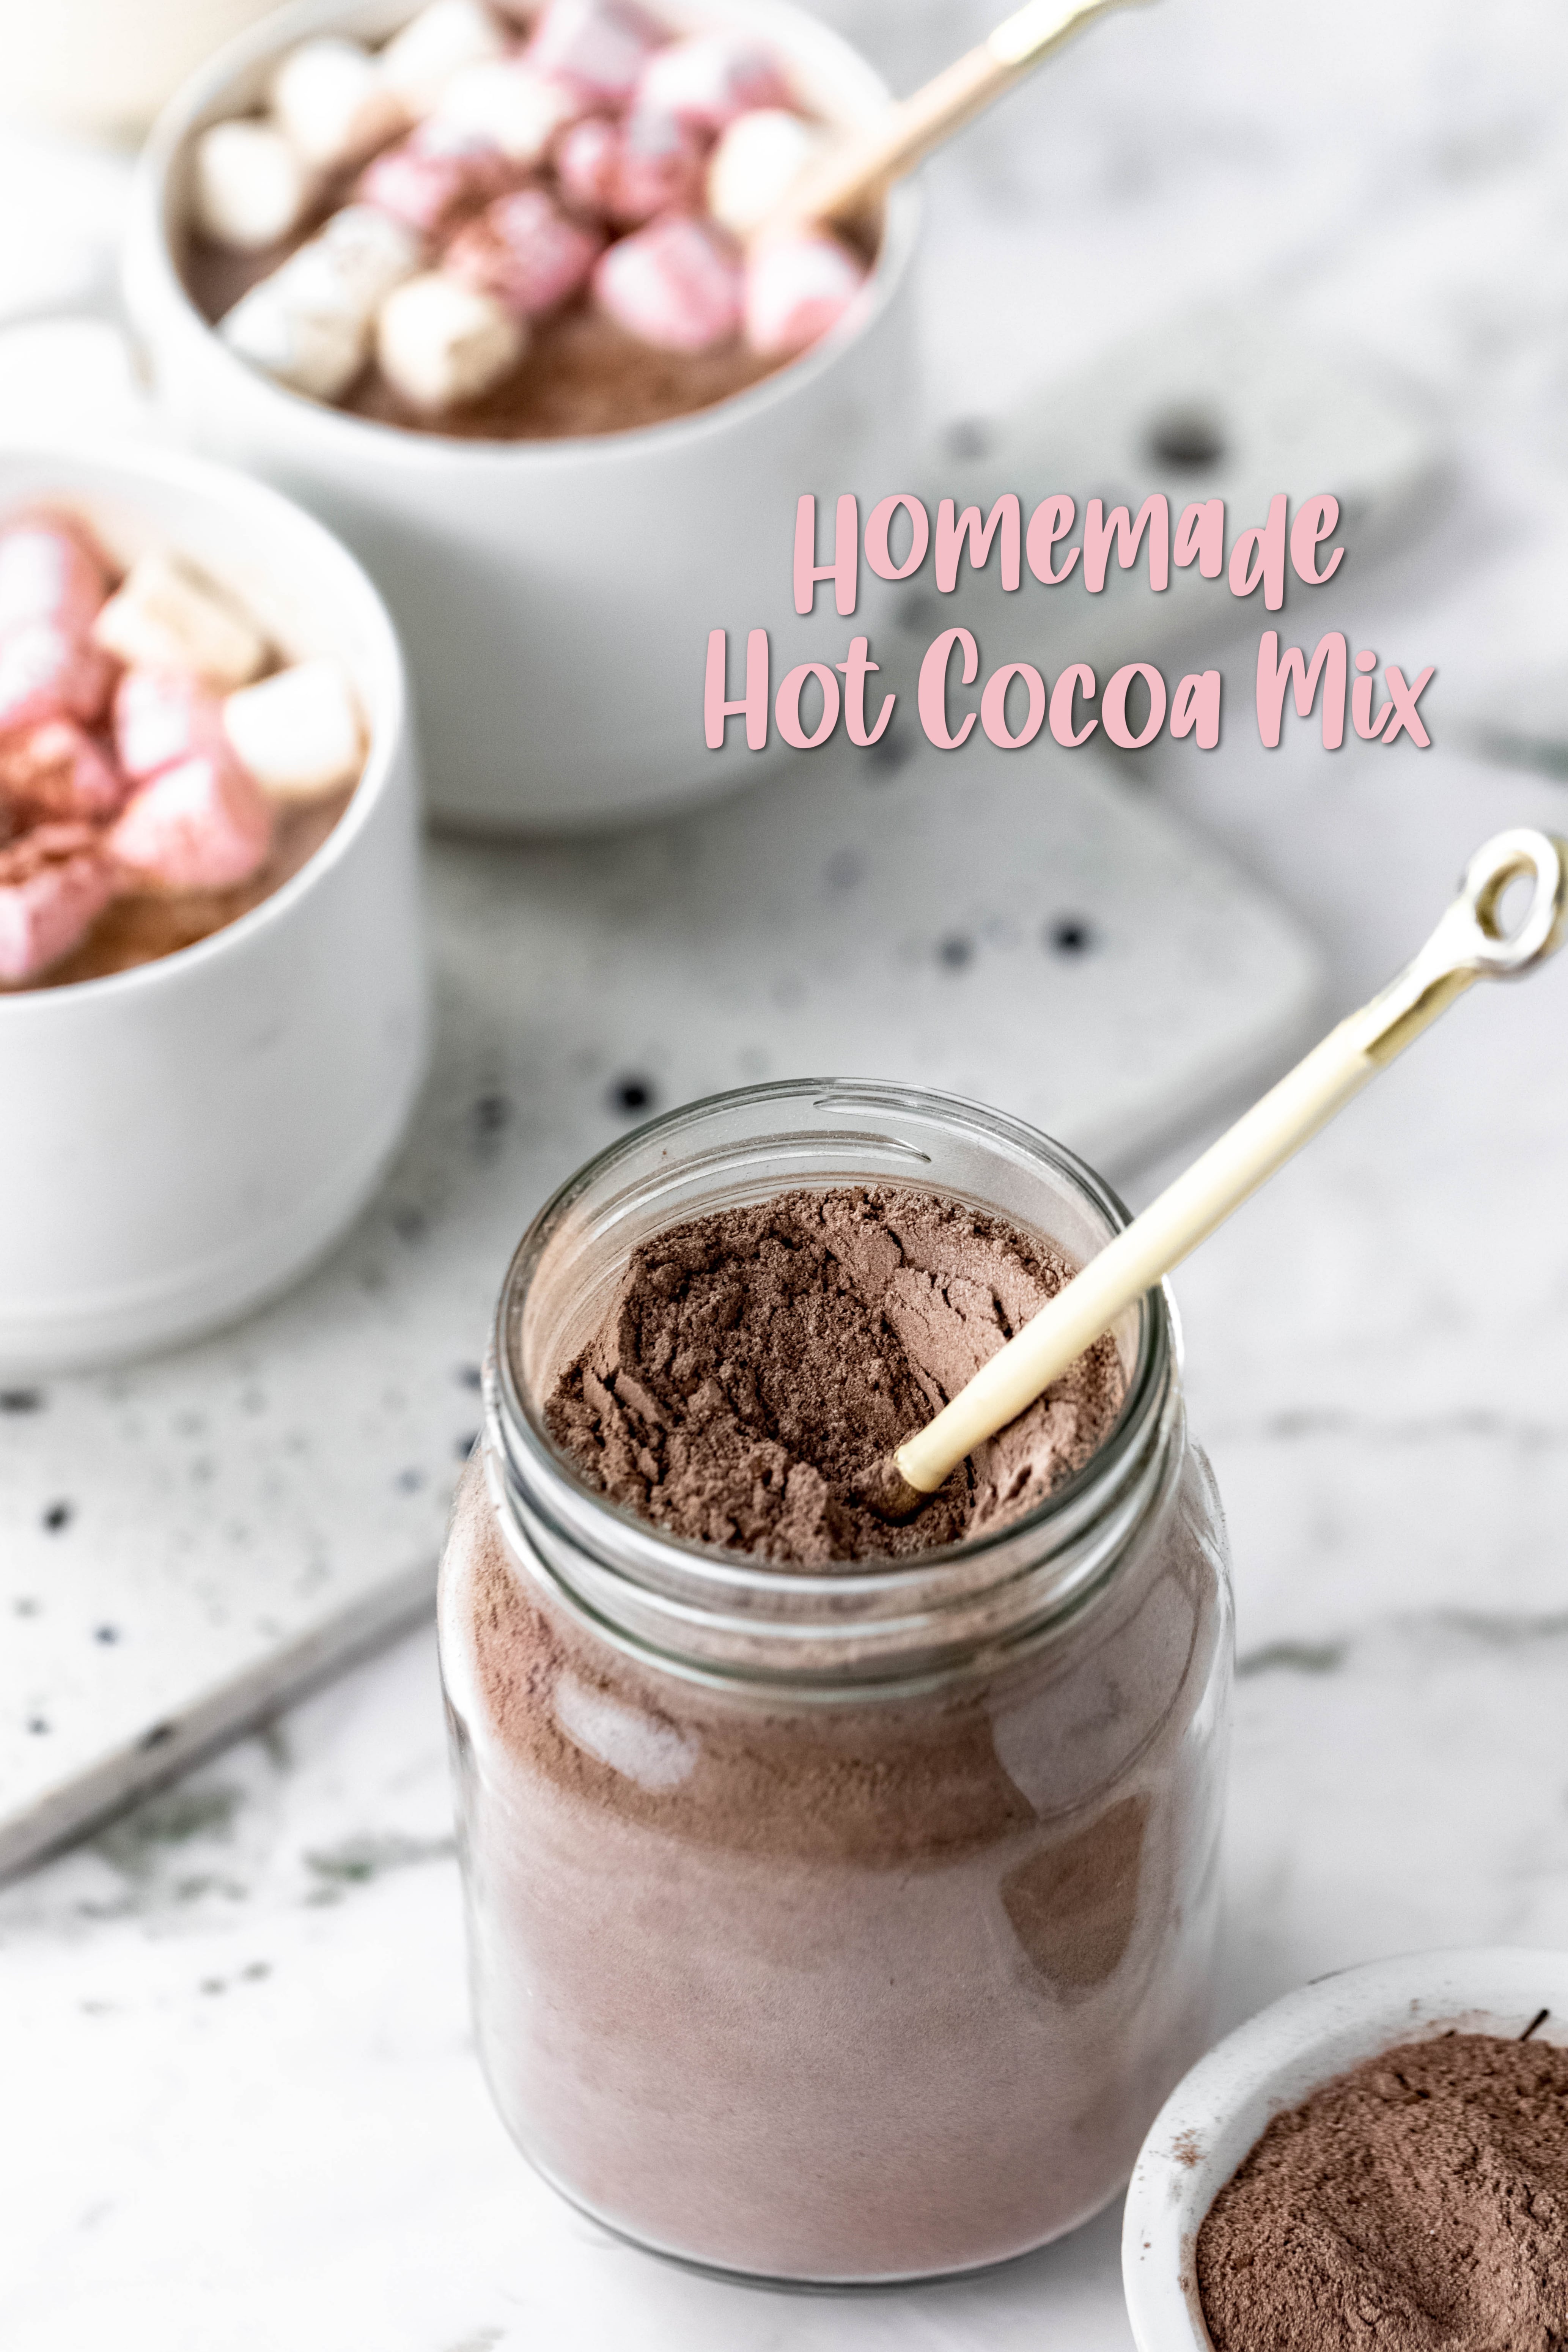 https://anaffairfromtheheart.com/wp-content/uploads/2013/12/Homemade-Hot-Cocoa-Mix-9.jpg